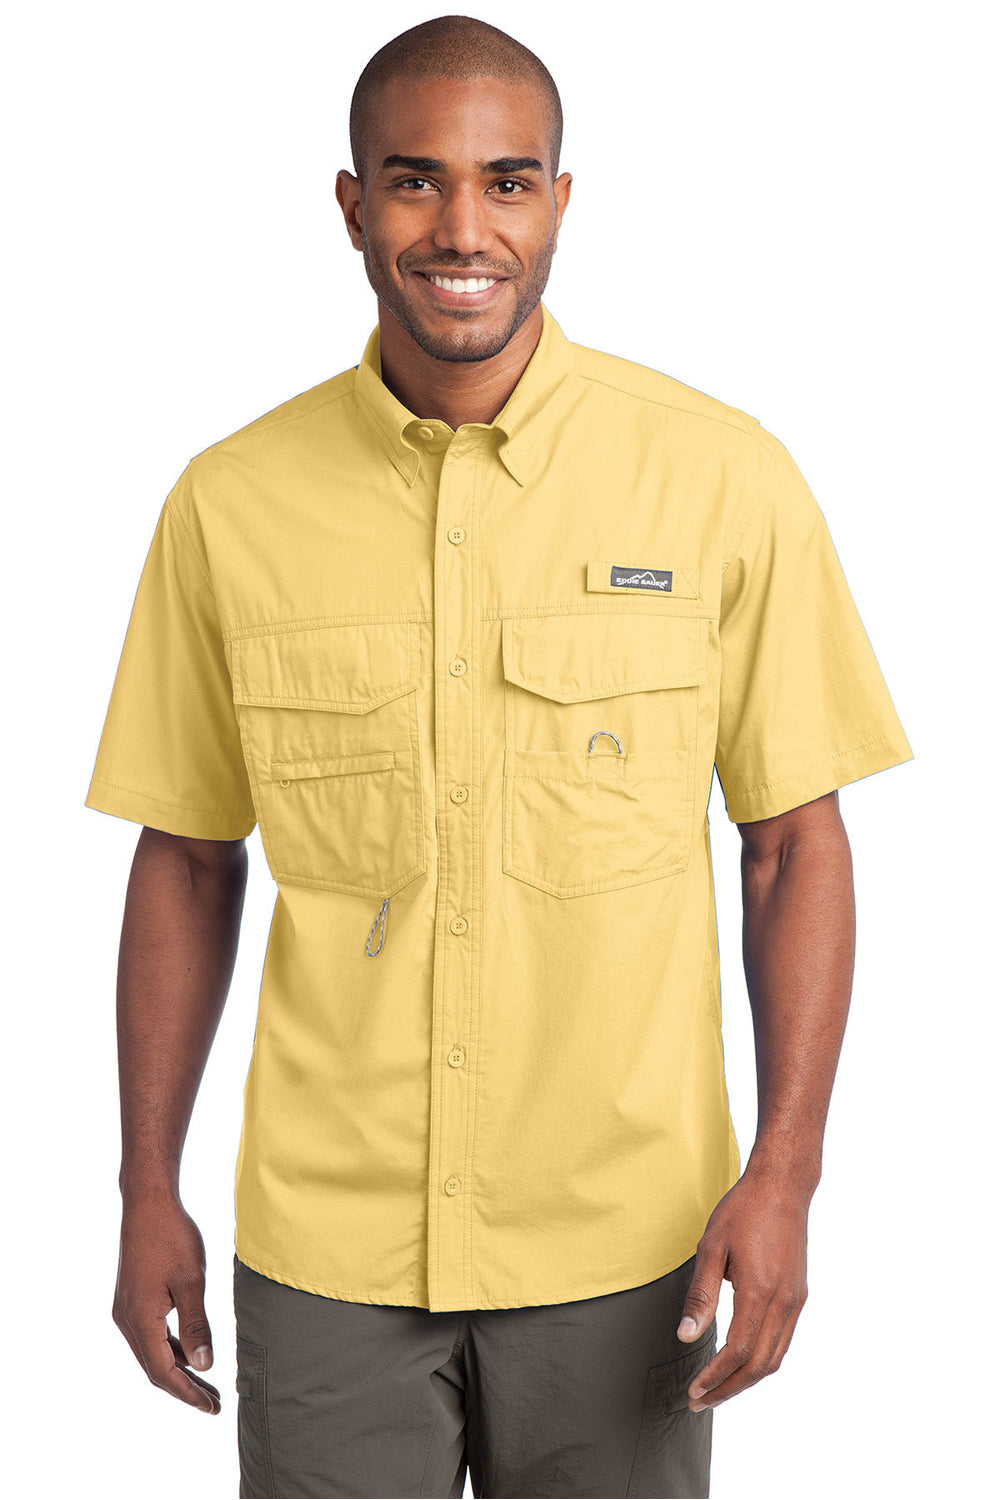 adviicd Mens Button Down Short Sleeve Shirt Short Sleeve Fishing Shirt  Wicking Fabric Sun Protection Casual Button Down Shirts Yellow M